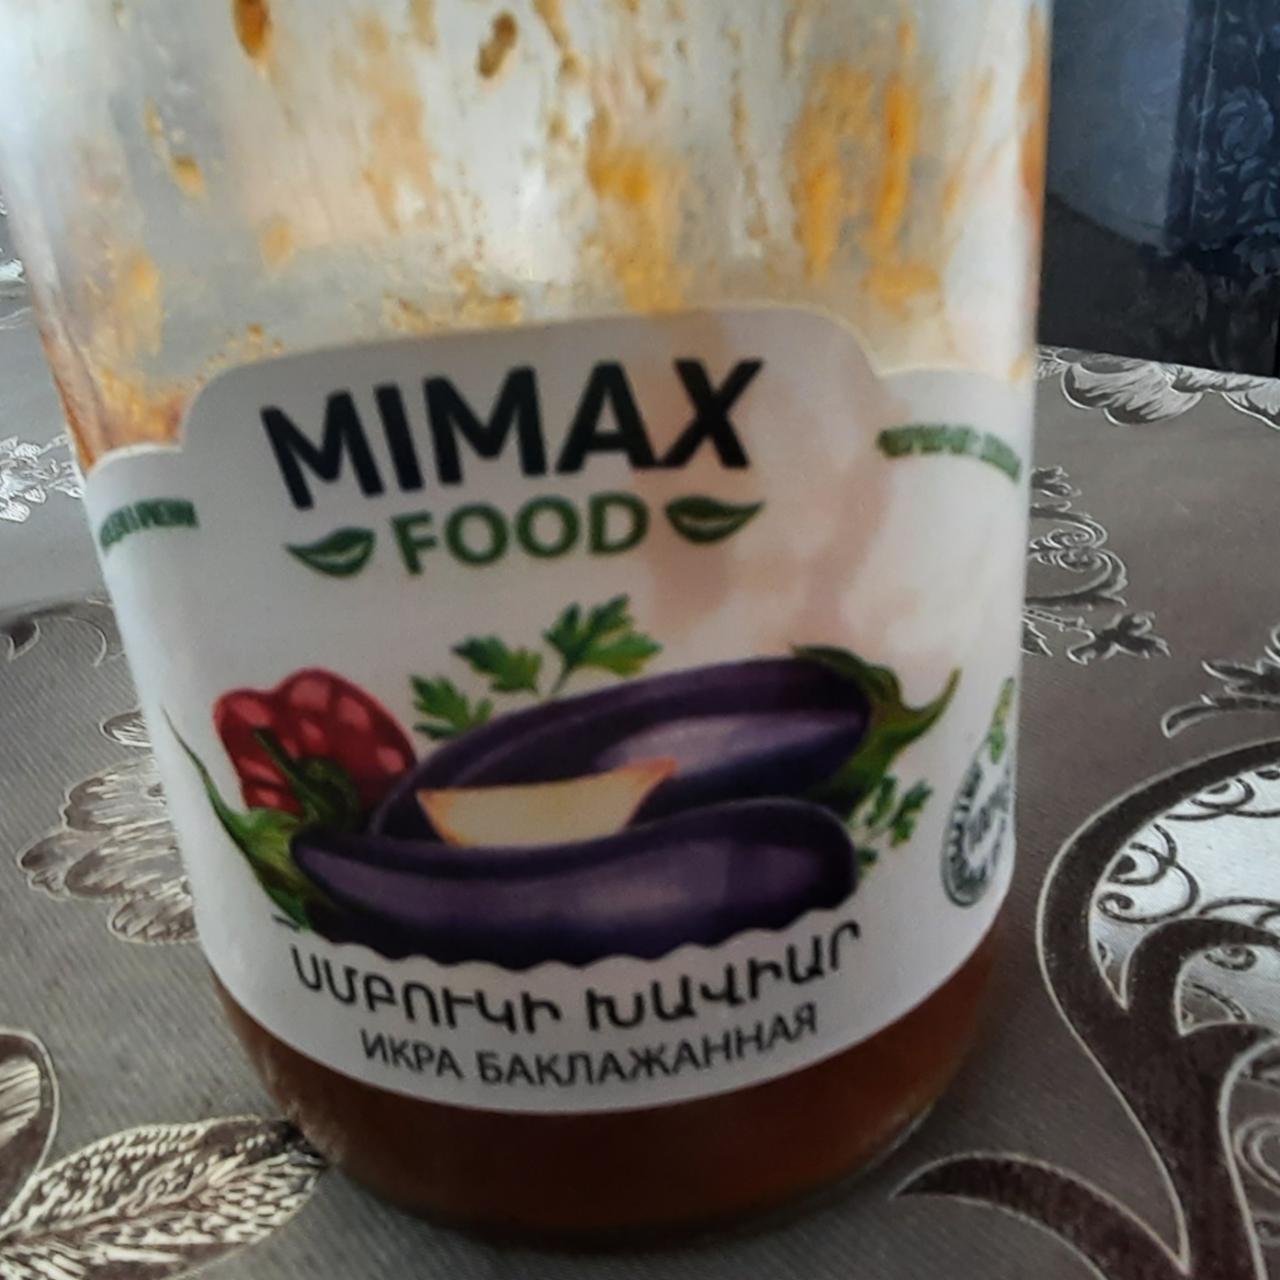 Фото - Икра баклажанная Mimax food